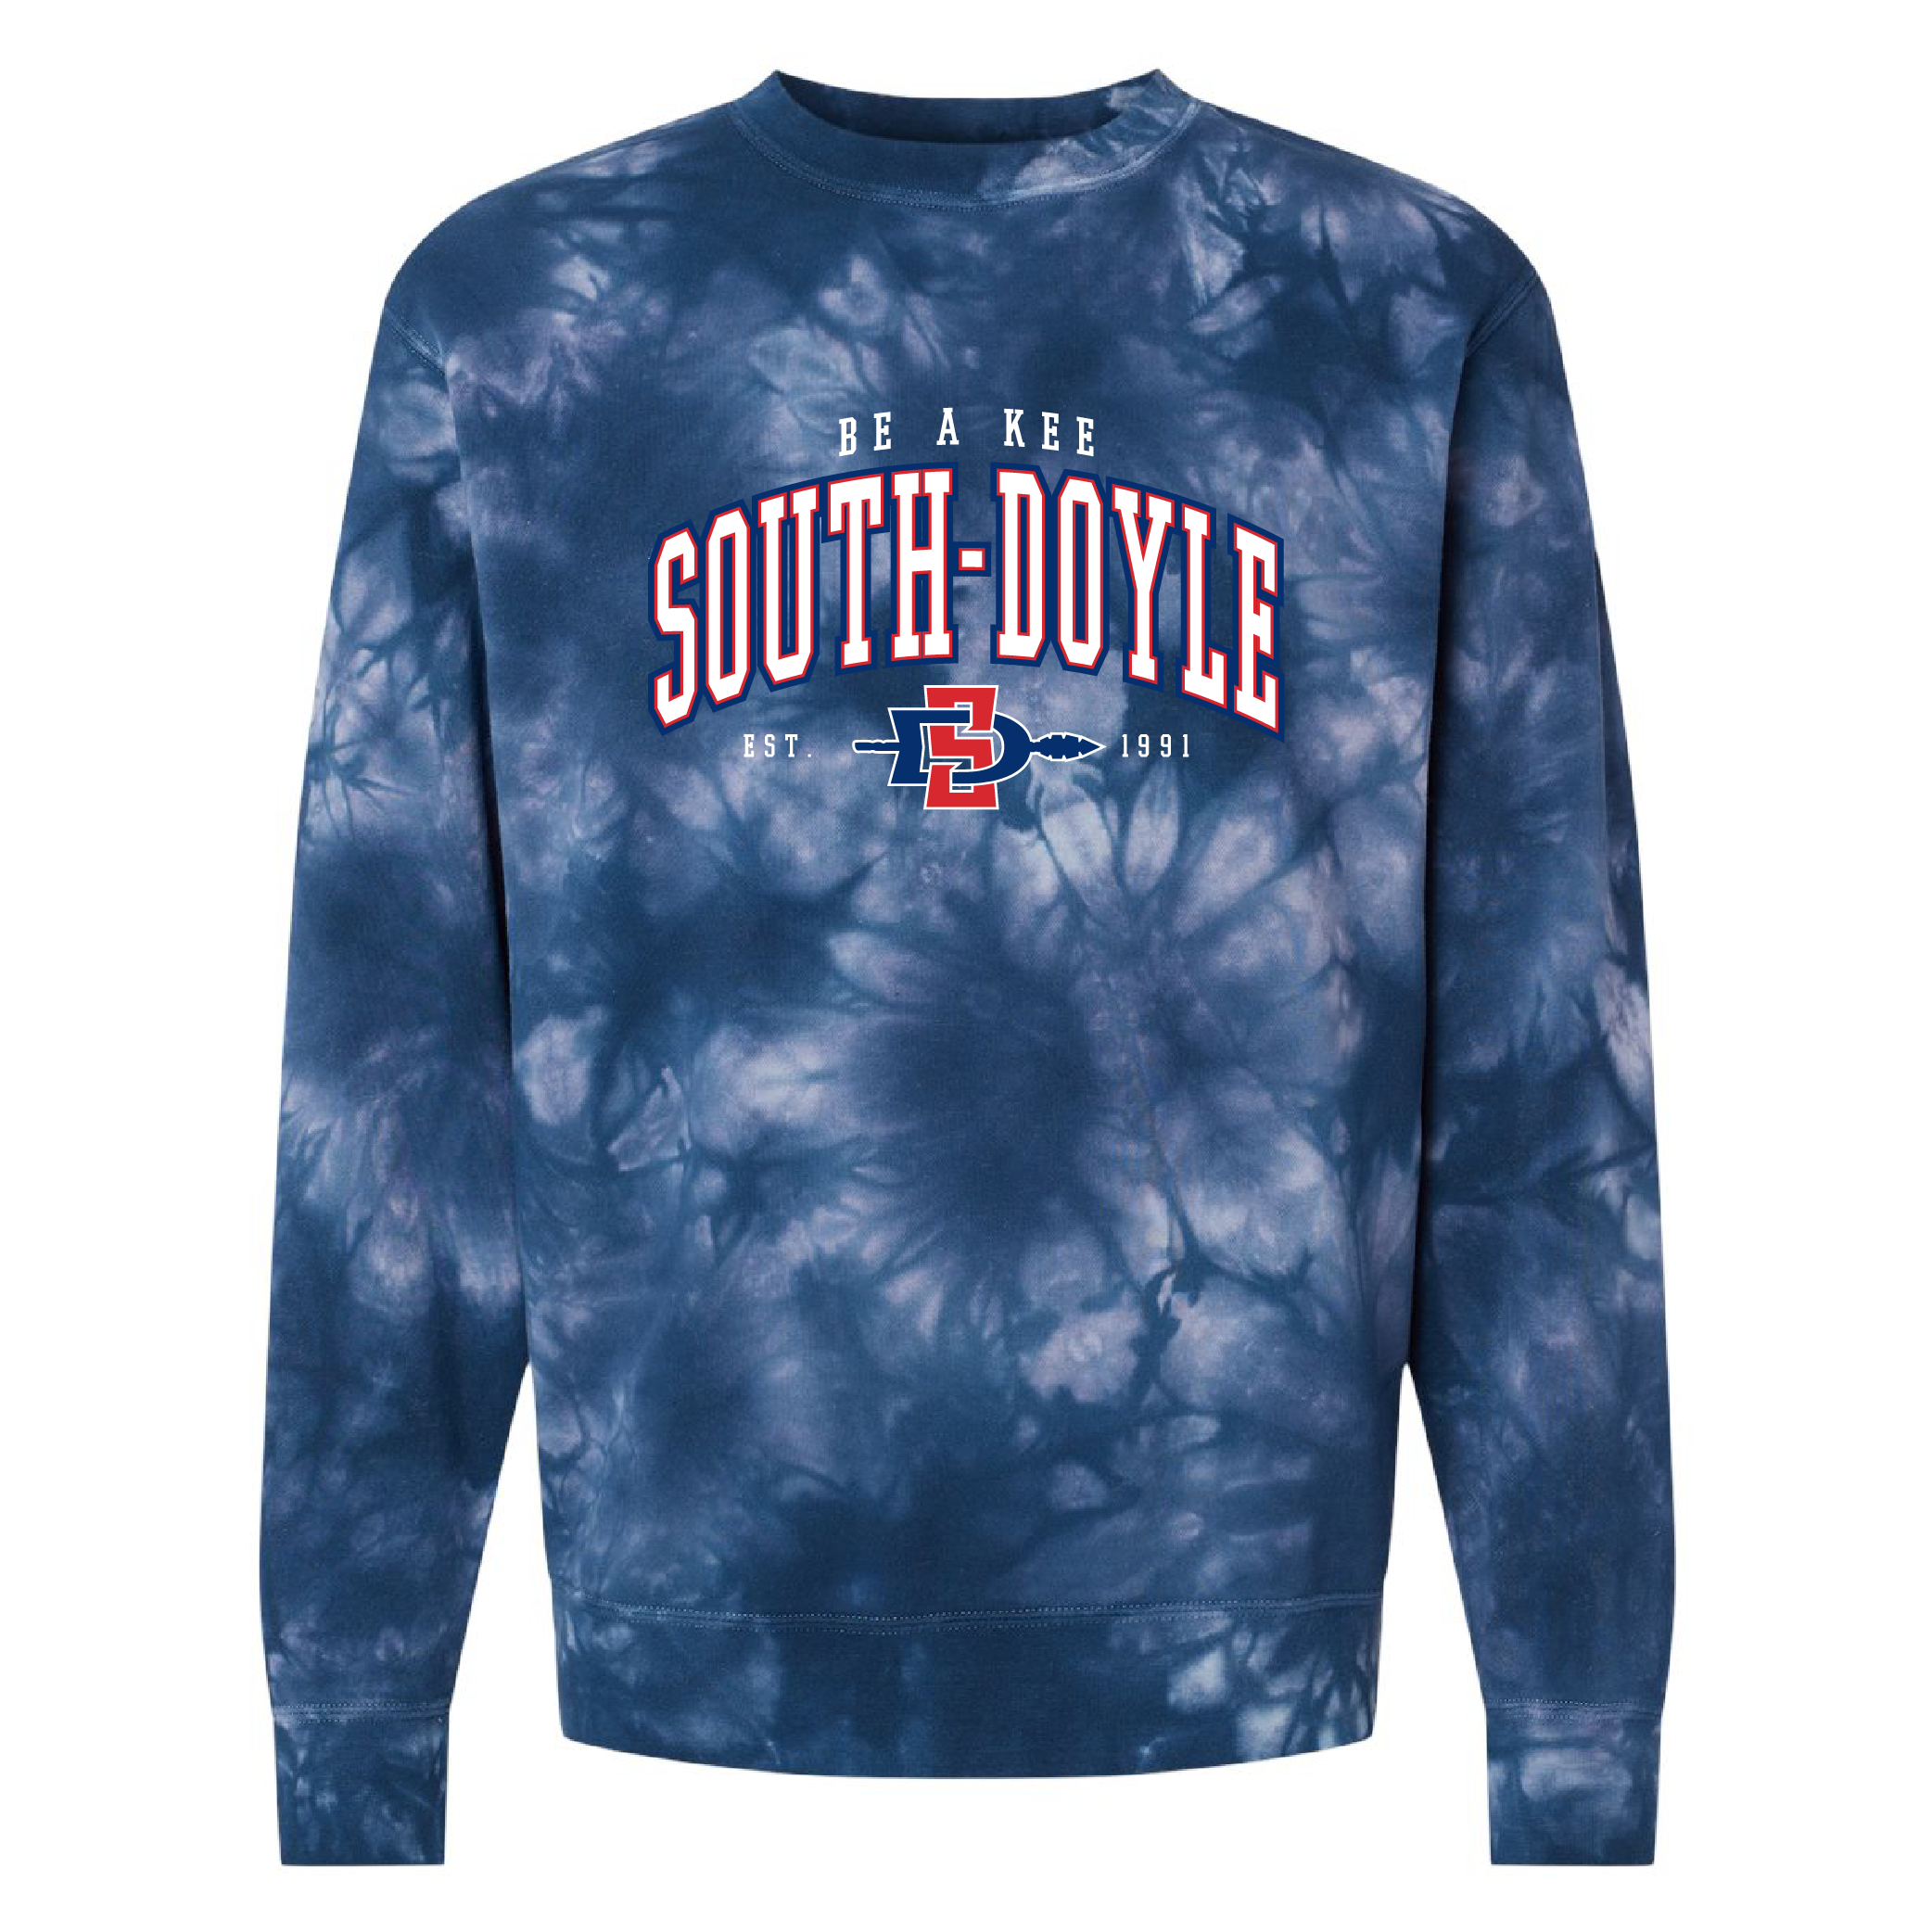 South-Doyle Garment-Dyed Crewneck Sweatshirt